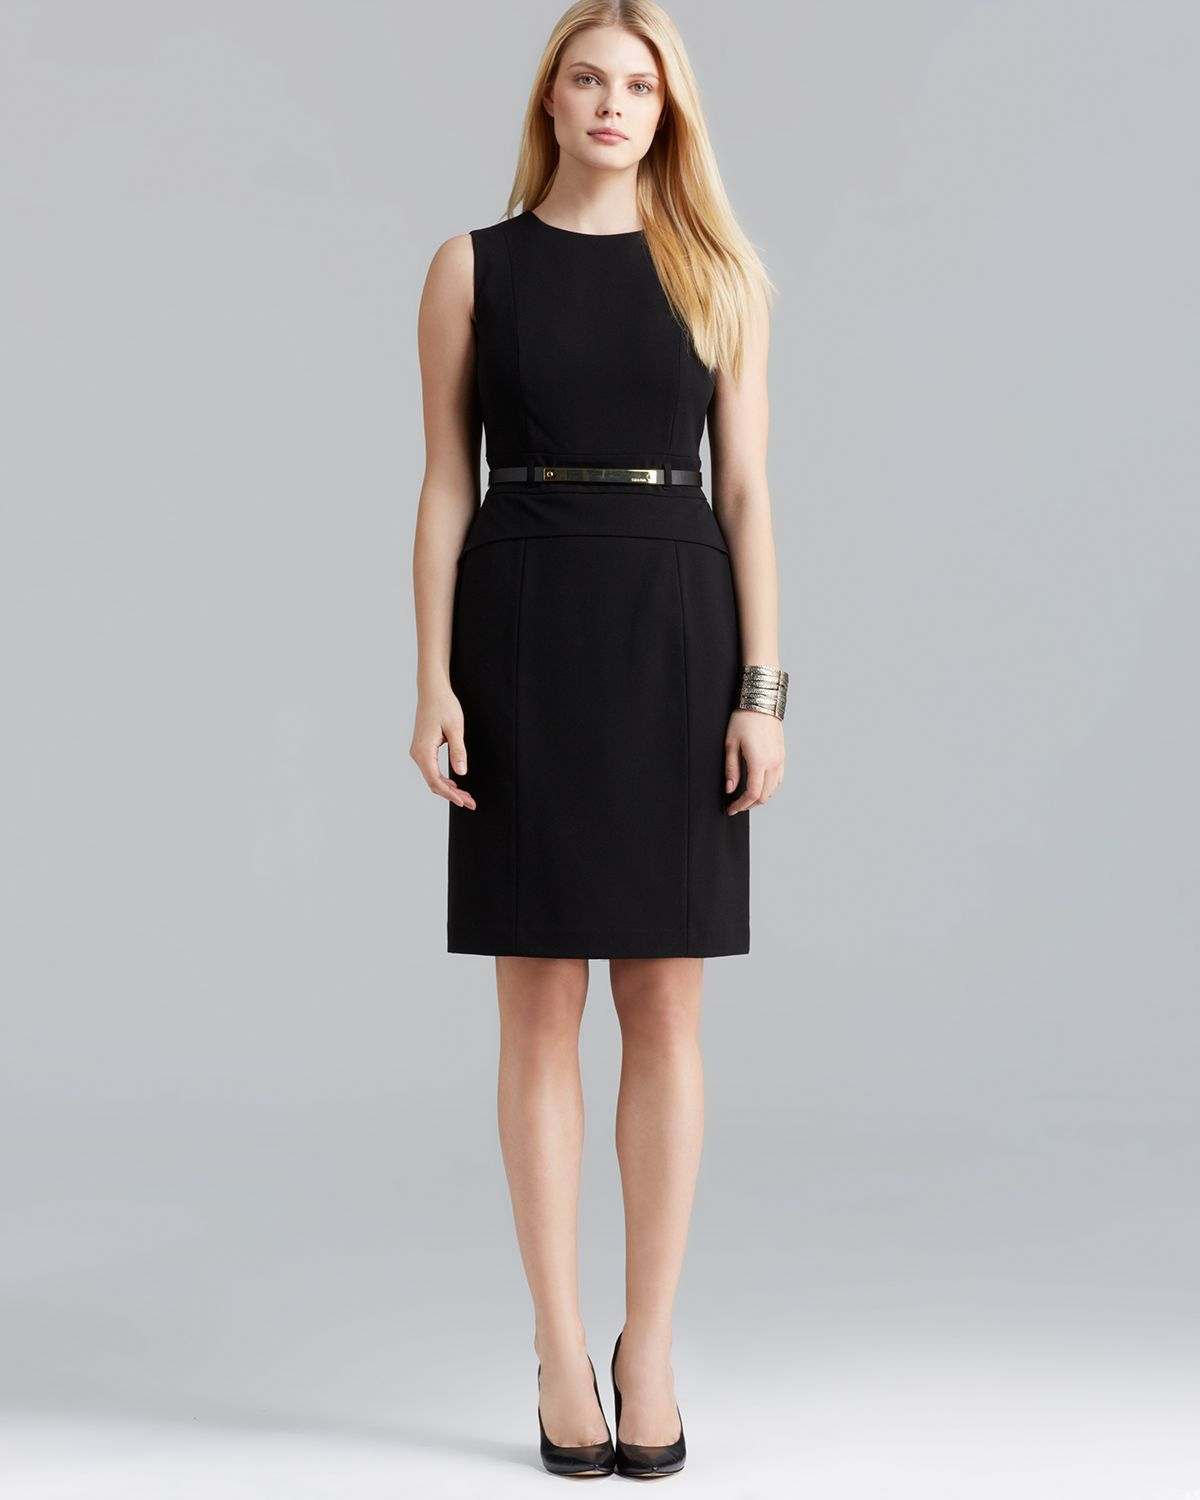 Lyst - Calvin Klein Dress Sleeveless Peplum Belted in Black